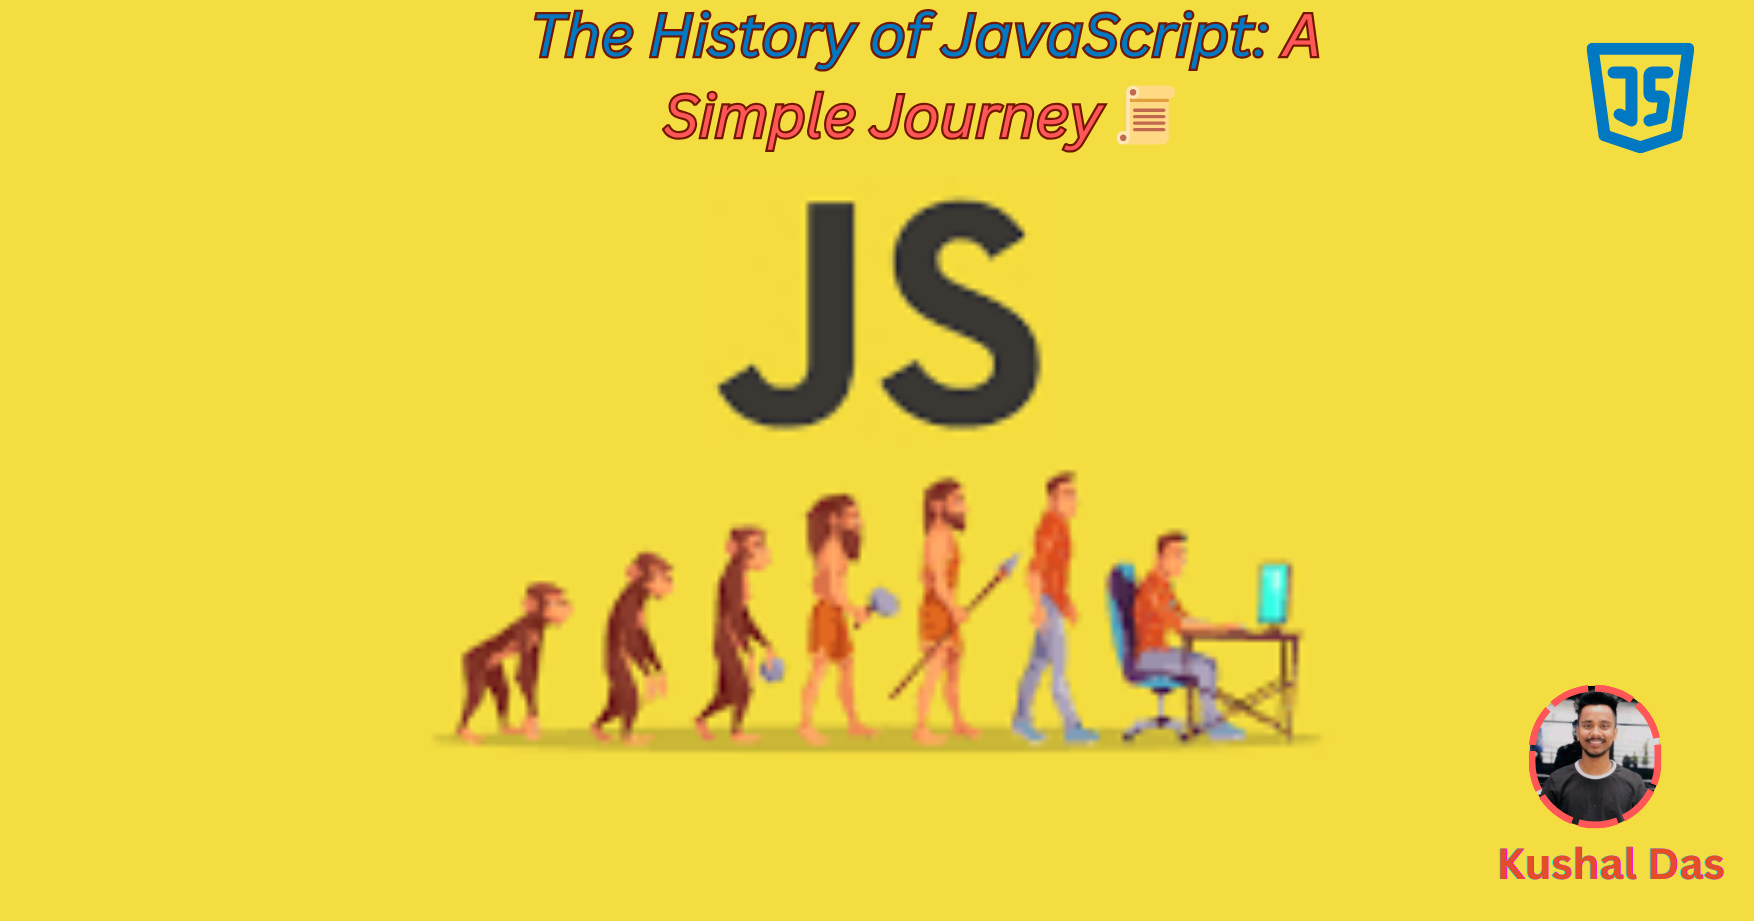 The History of JavaScript!